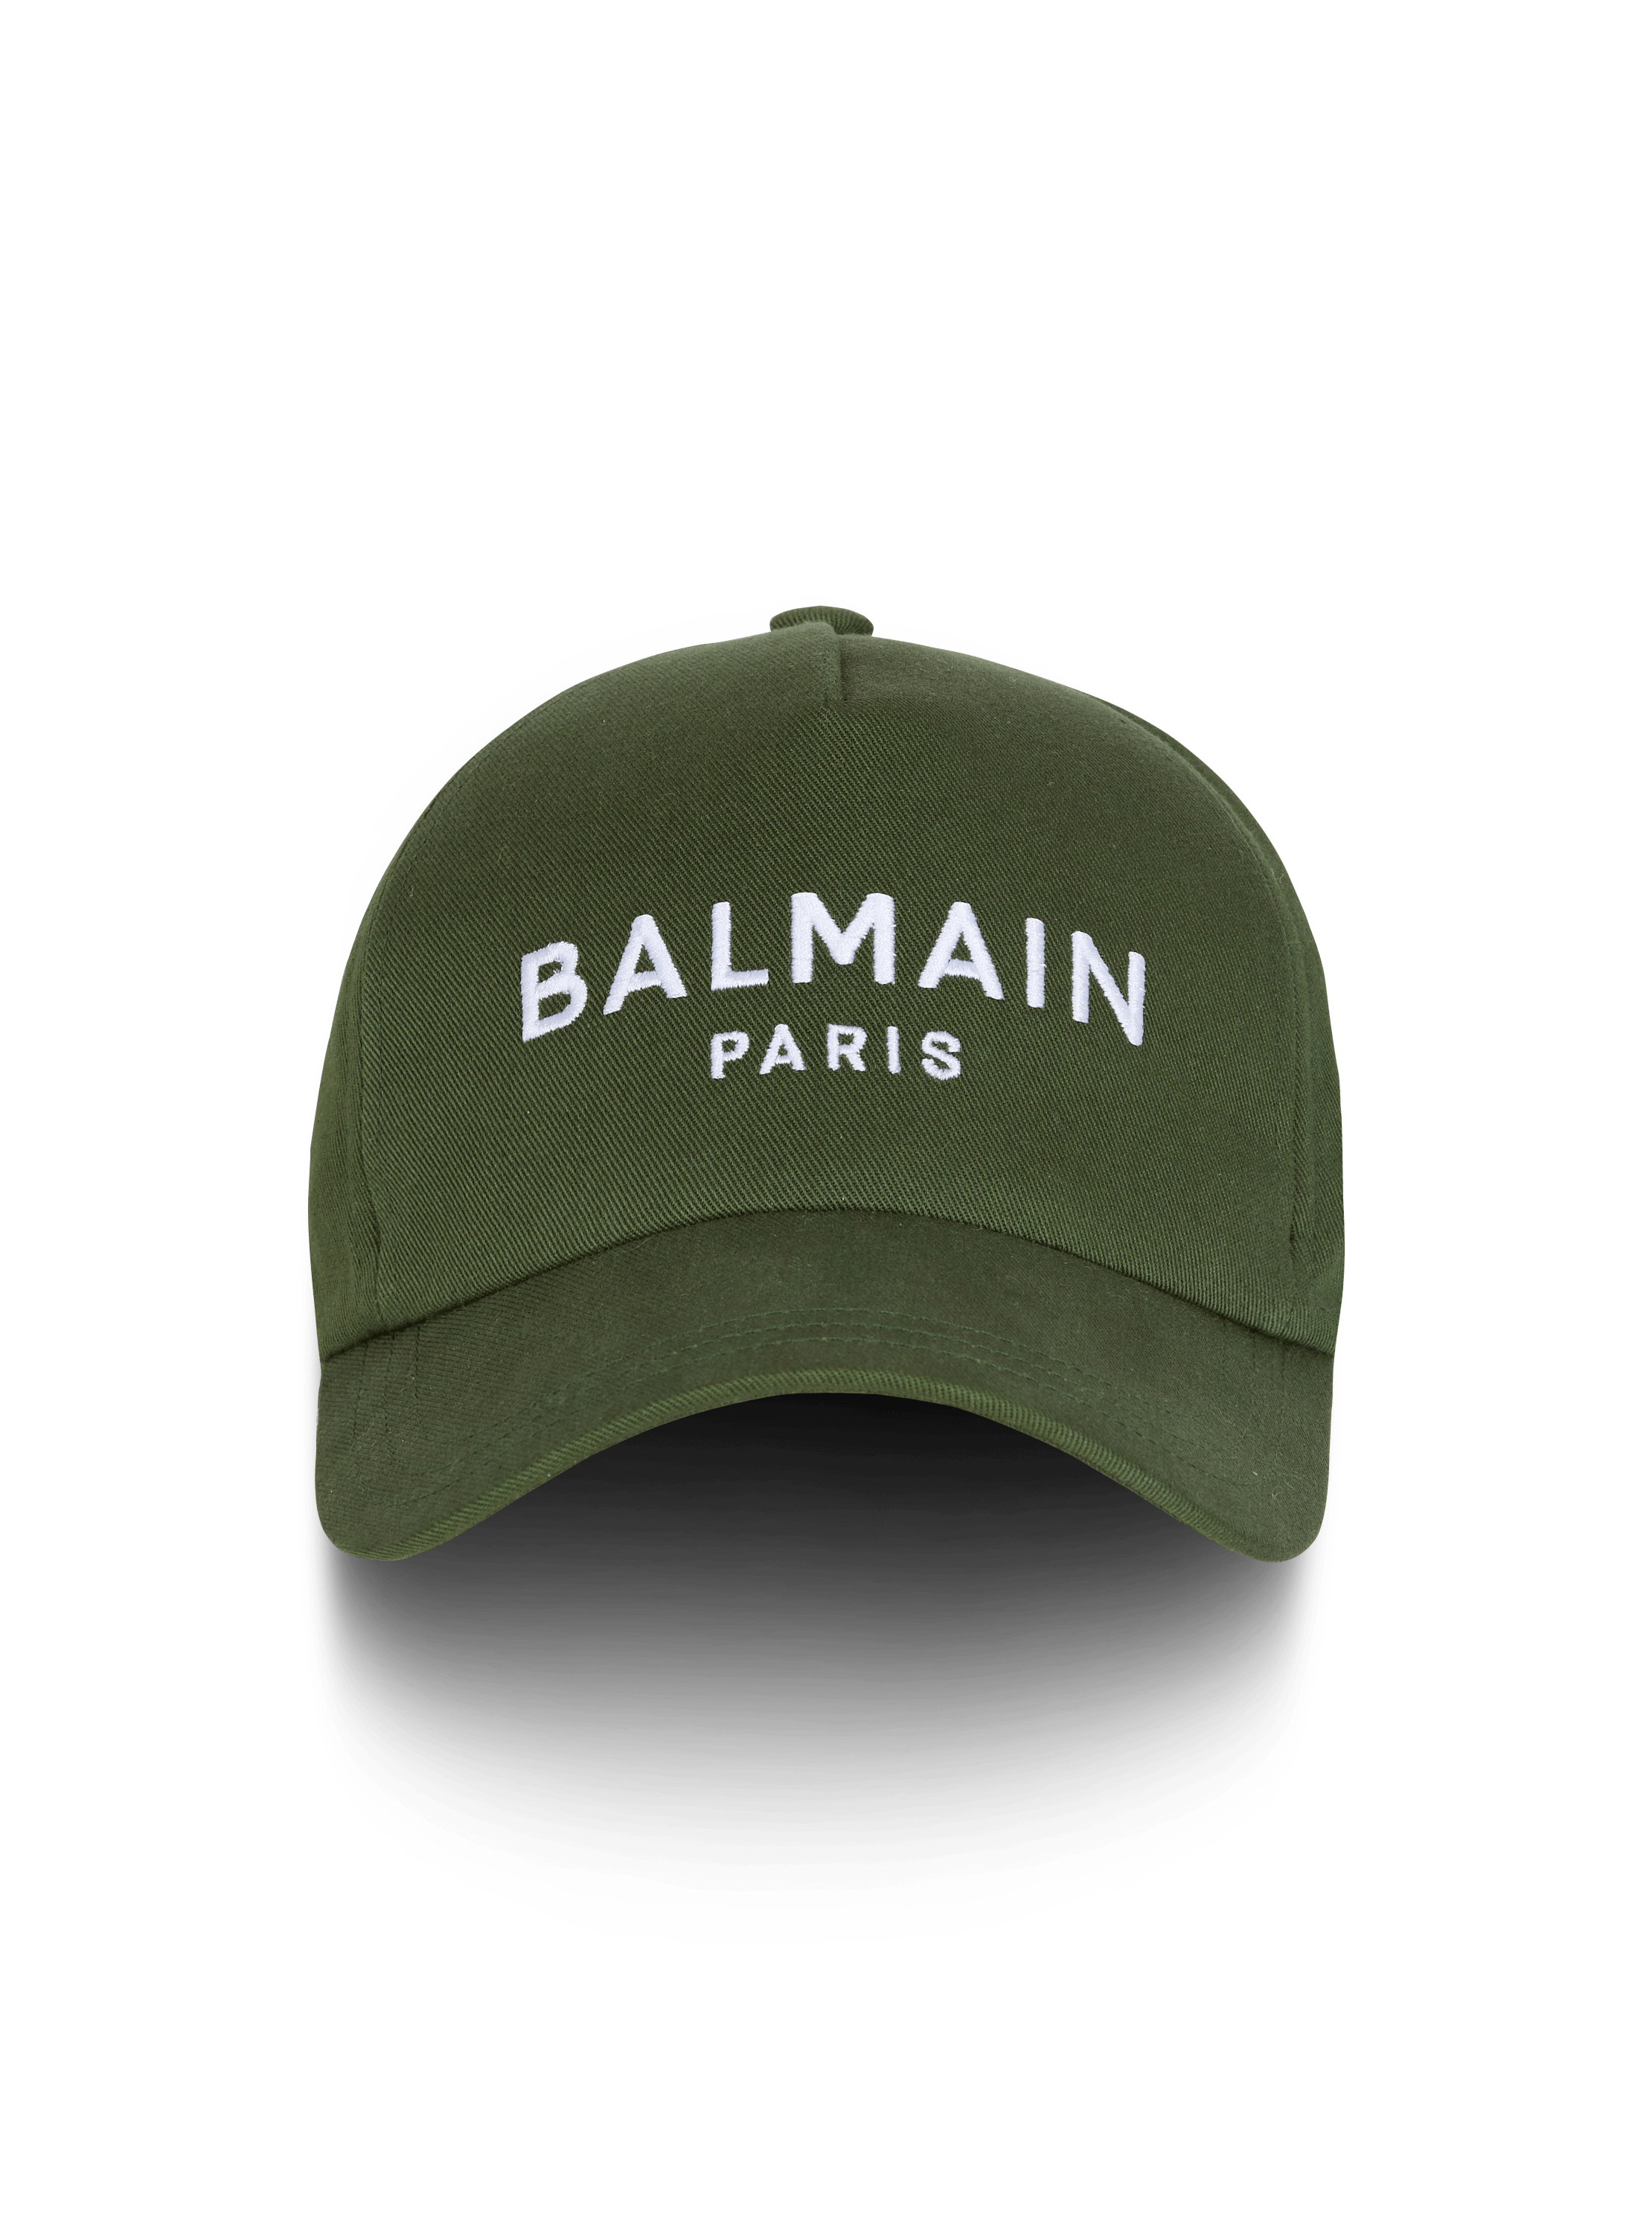 Balmain Paris エンブロイダリー コットンキャップ